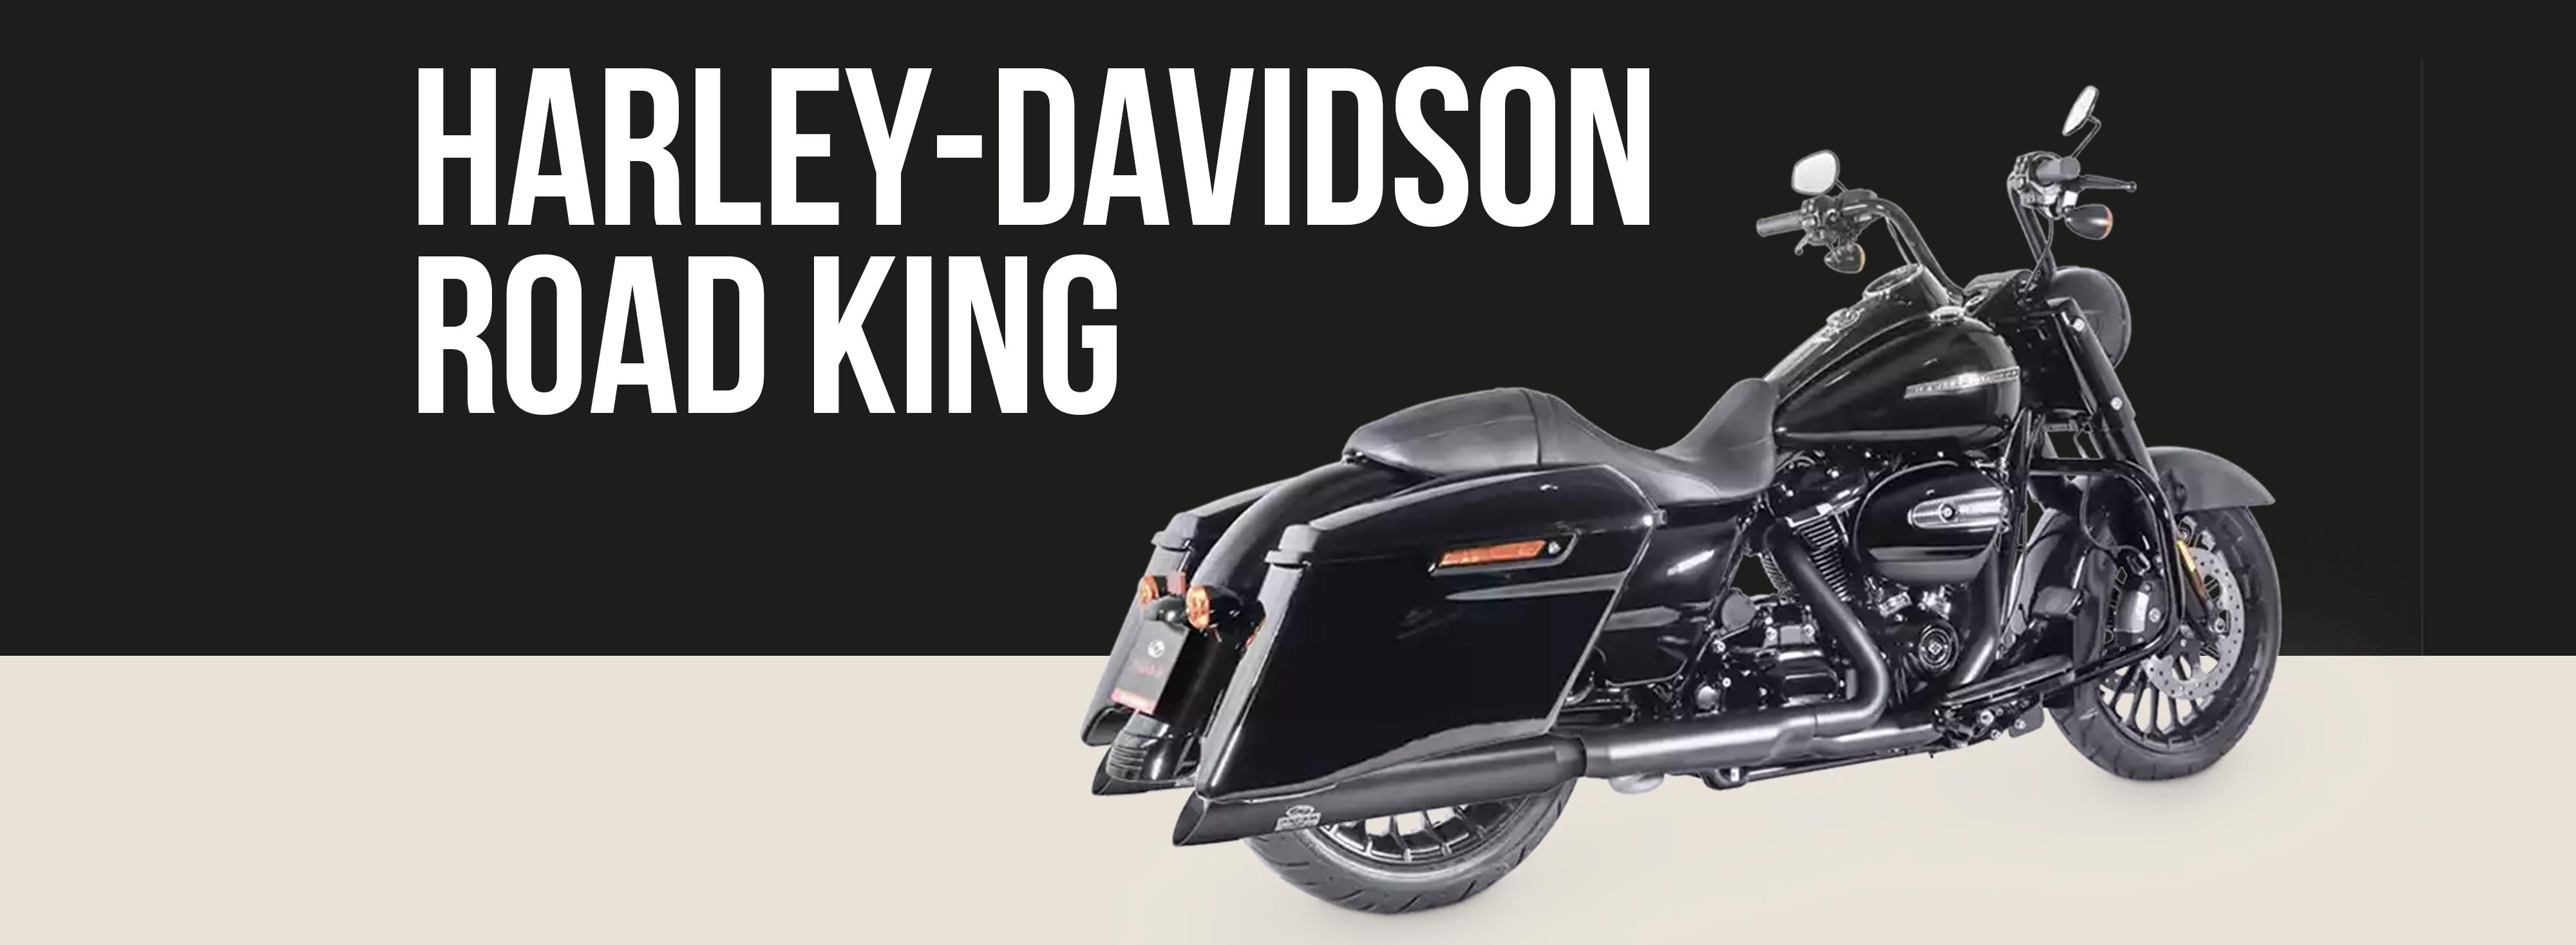 Harley-Davidson Road King Motorcycle Brand Page Header